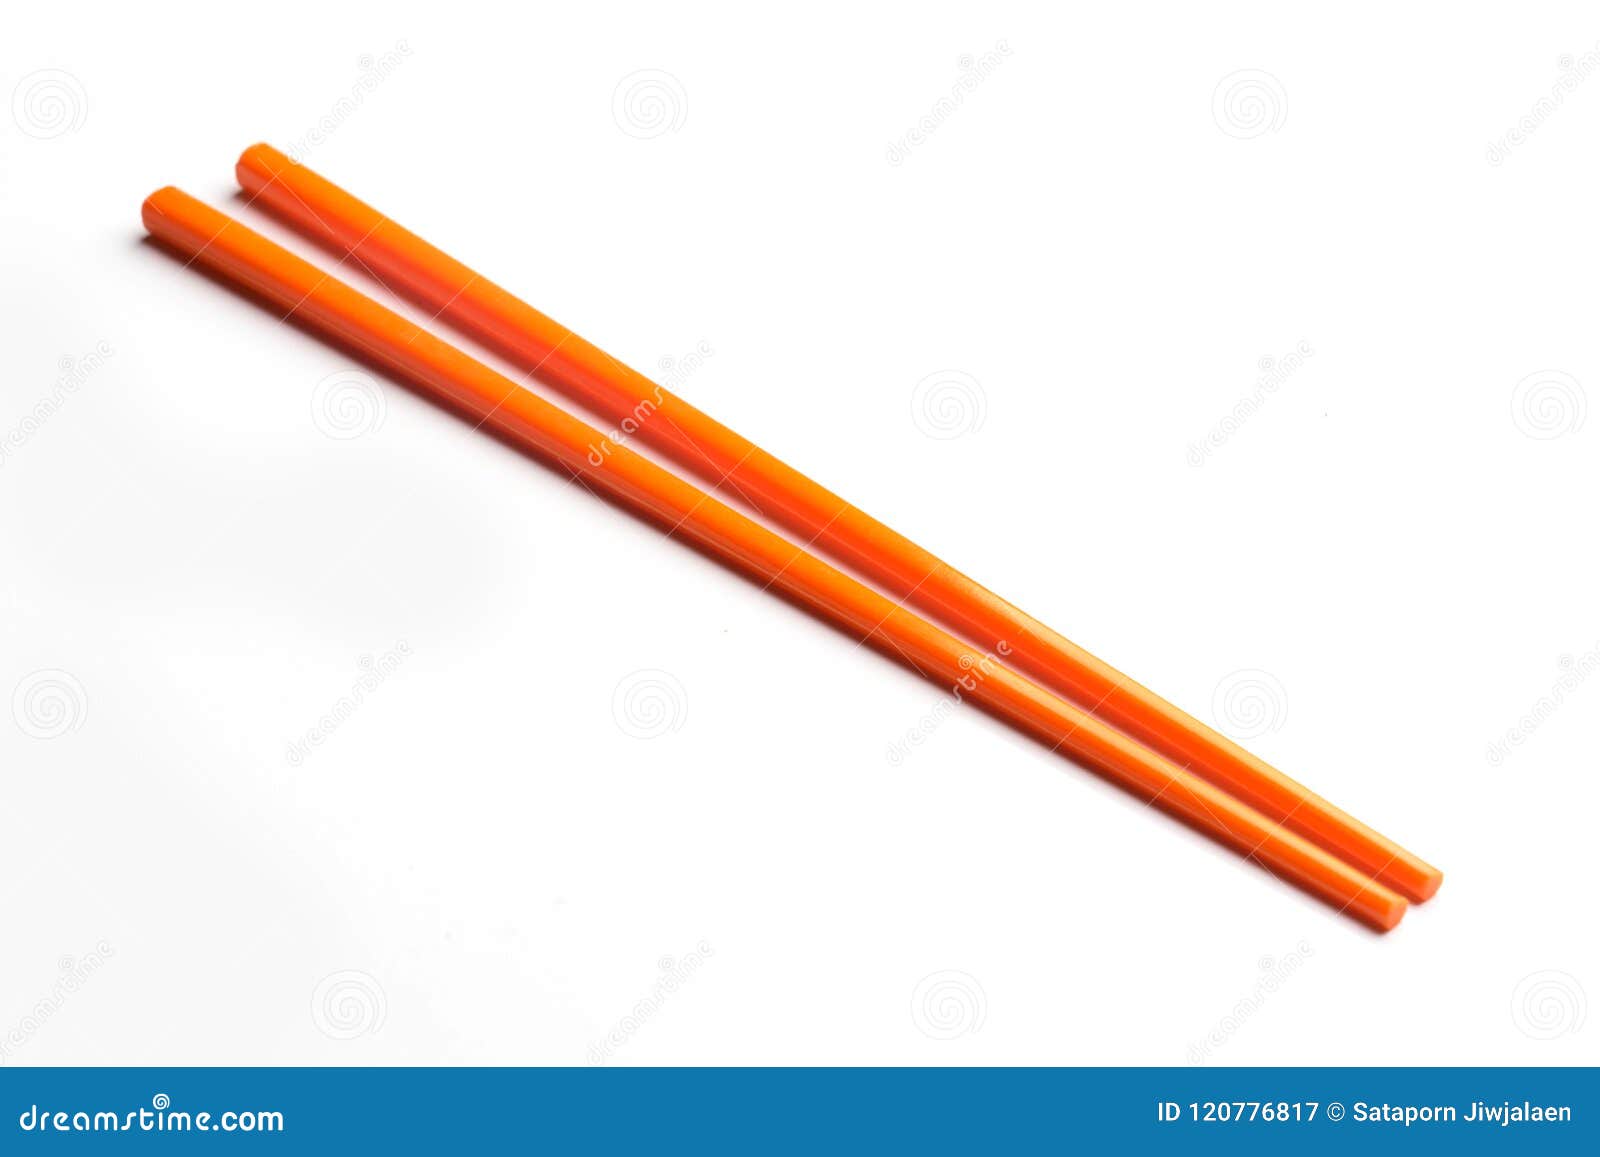 orange chopsticks  on white